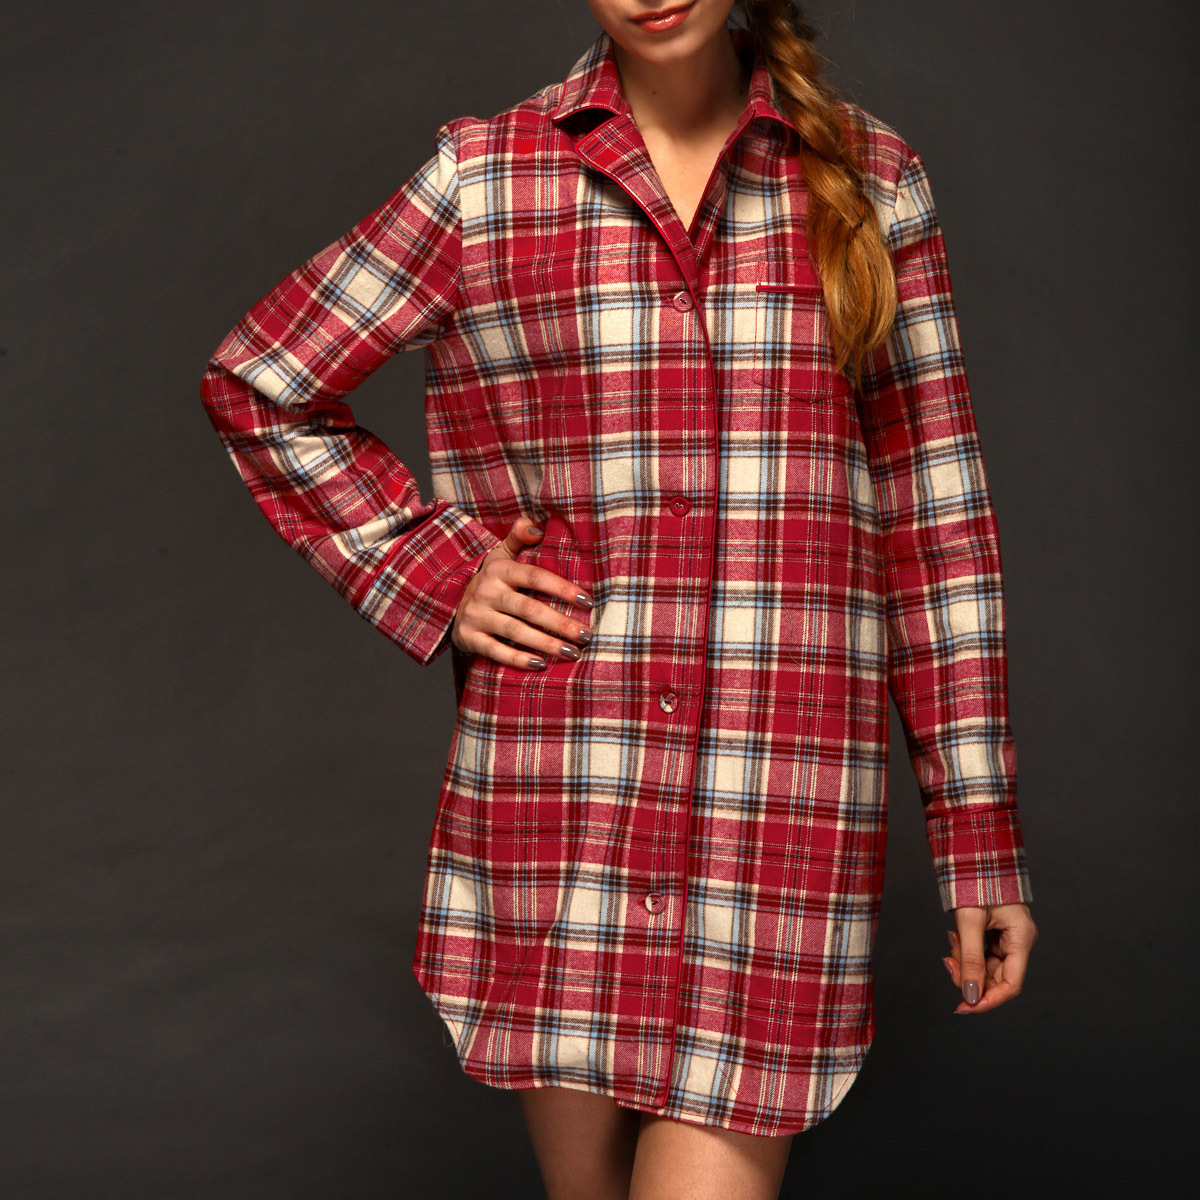 Designer Label 2012 winter 100% cotton plaid turn-down collar single breasted women's sleepwear robe nightgown yp7292